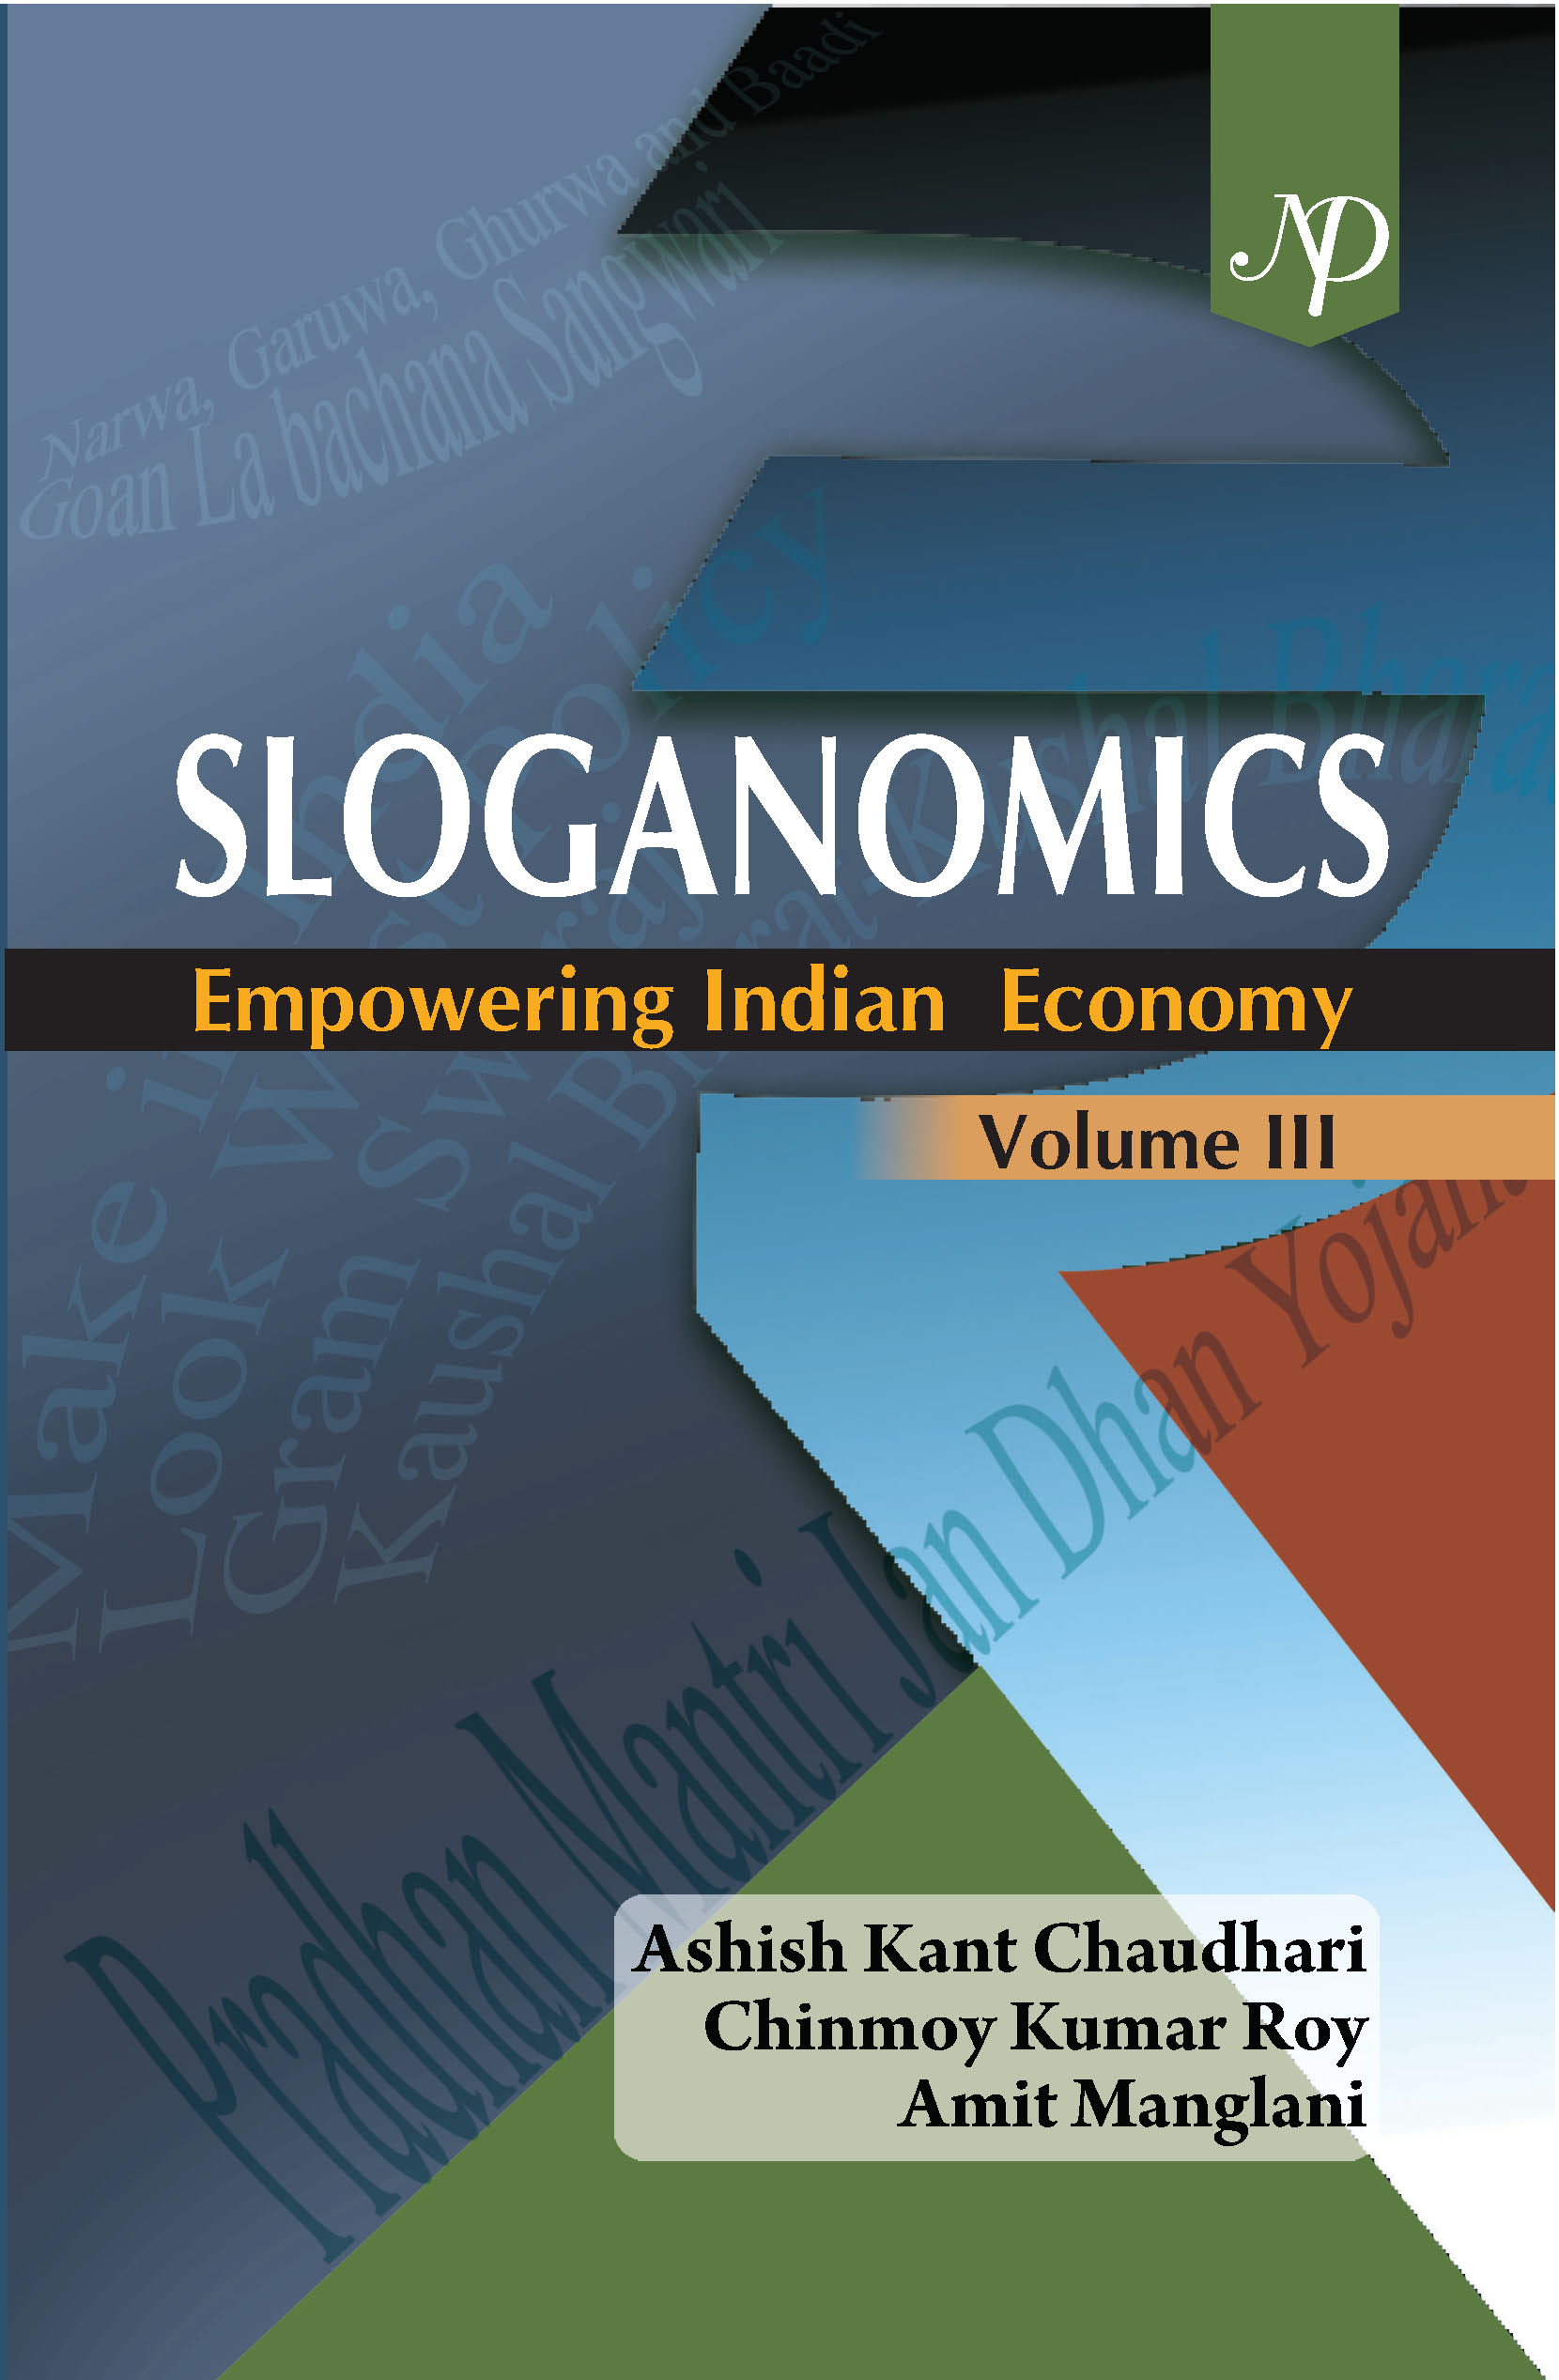 SLOGANOMIC - EMPOWERING INDIA ECONOMY Cover.jpg